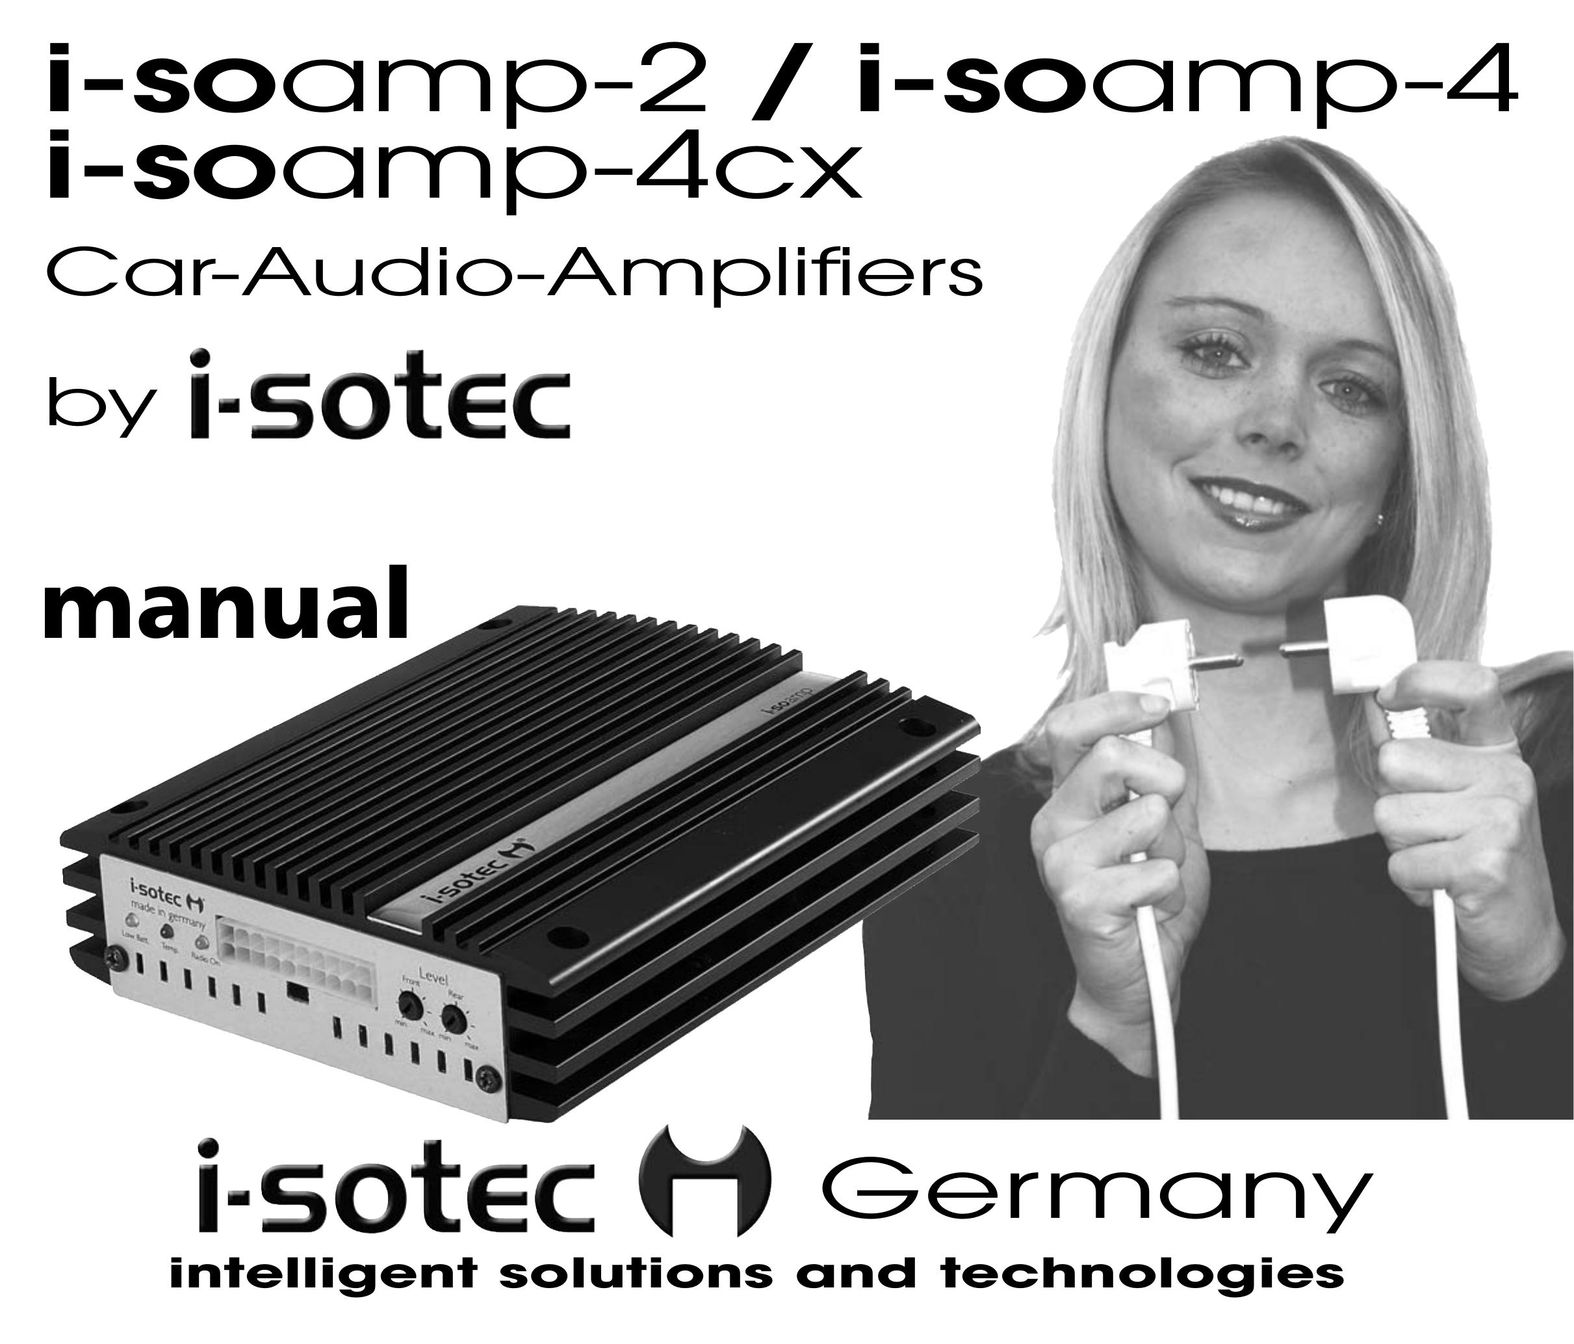 Braun i-soamp-4 Car Amplifier User Manual